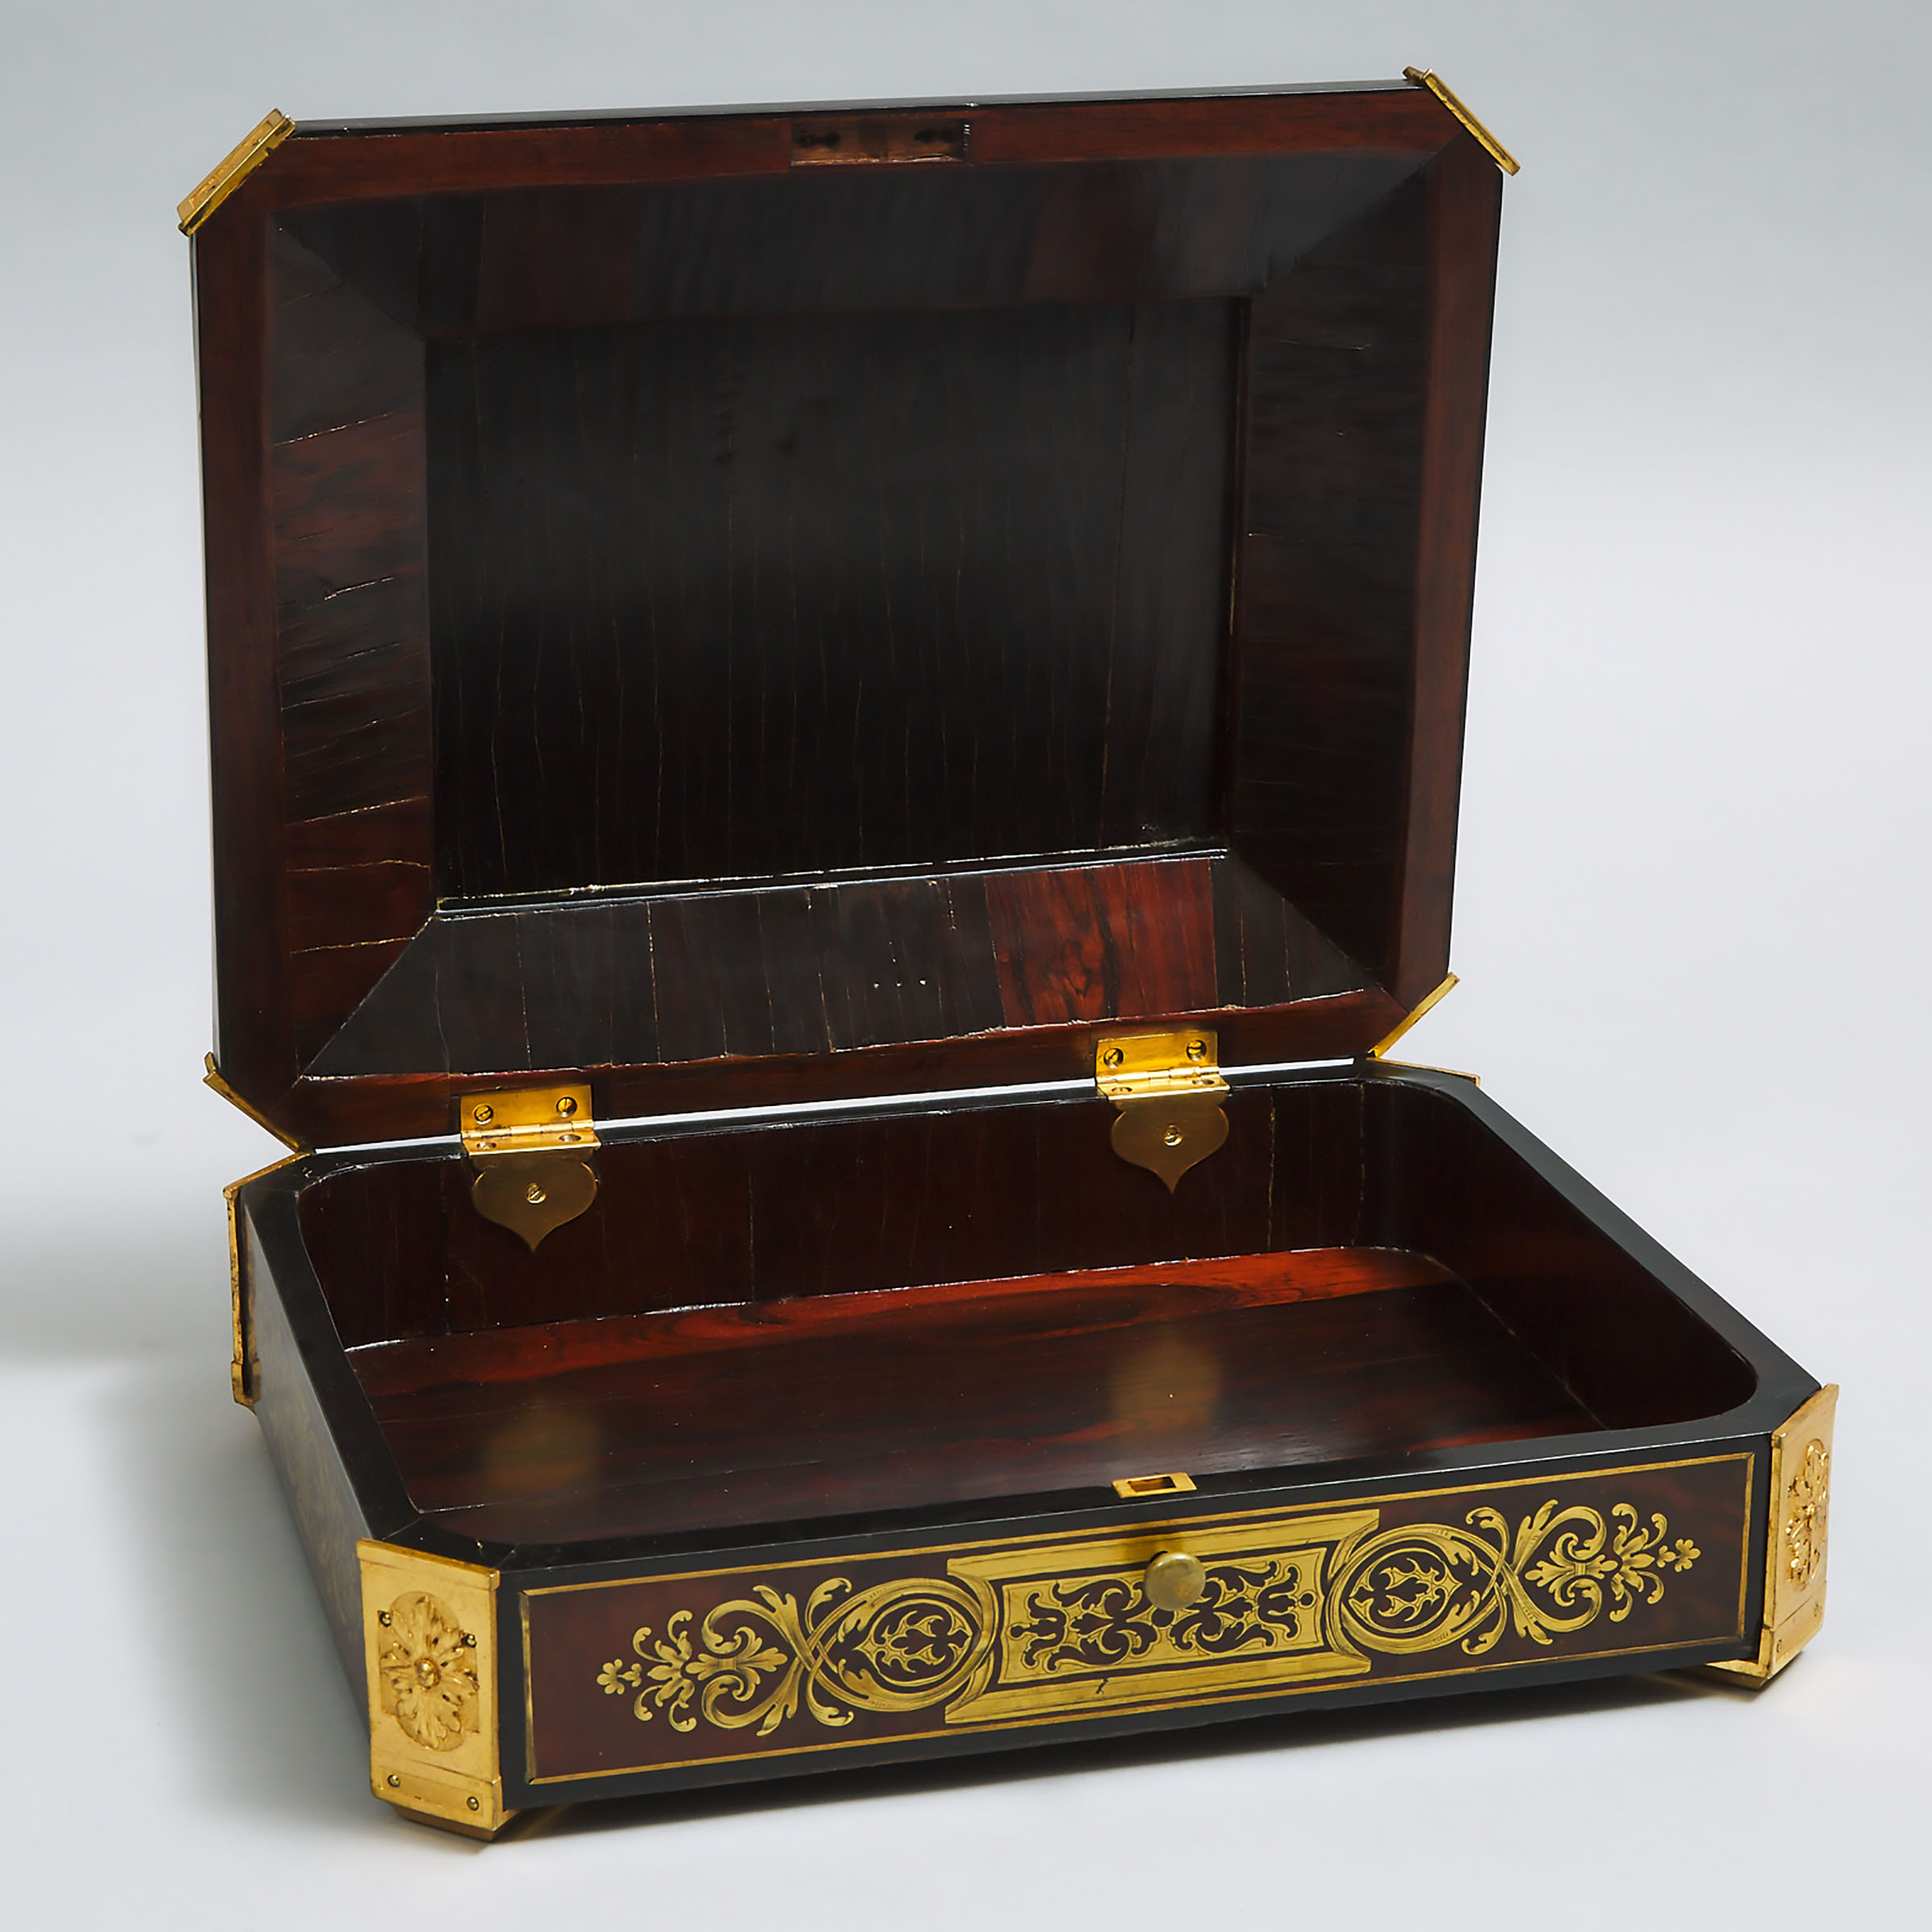 Napoleon III Louis XIV Style Ormolu Mounted and Brass Inlaid Coromandel Document Box, 19th century